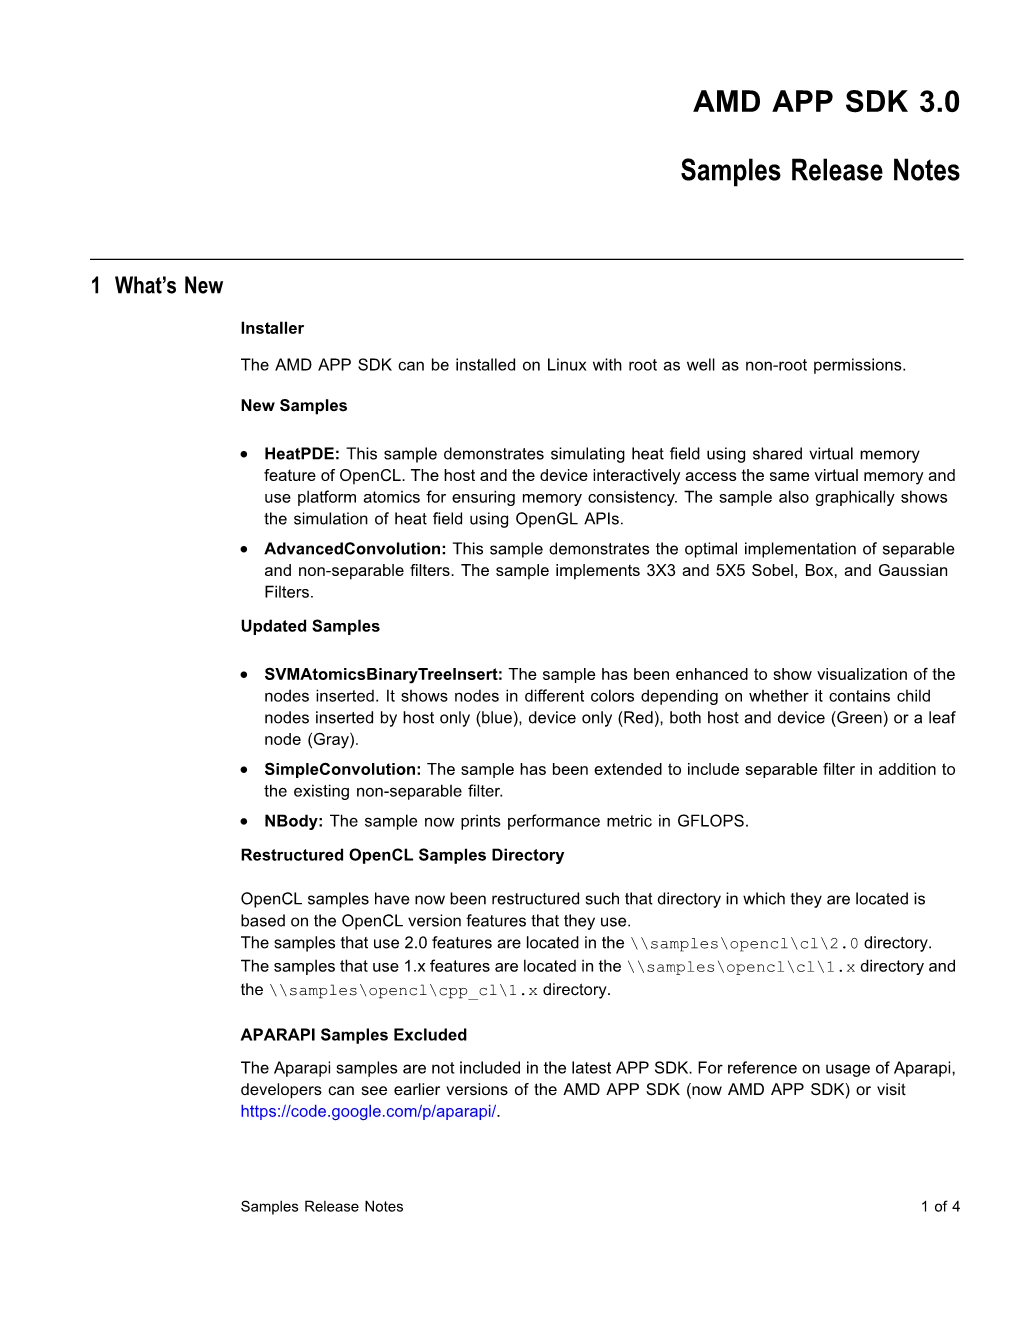 AMD APP SDK 3.0 Samples Release Notes Document